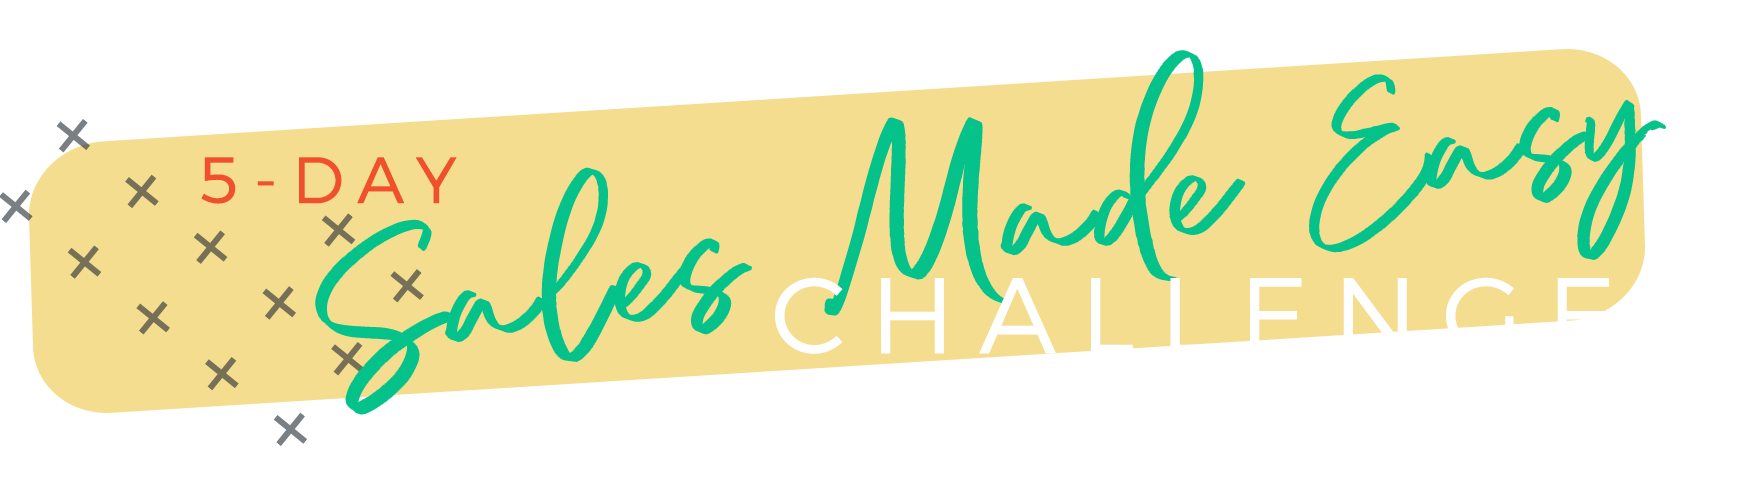 Sales Made Easy Challenge Logo